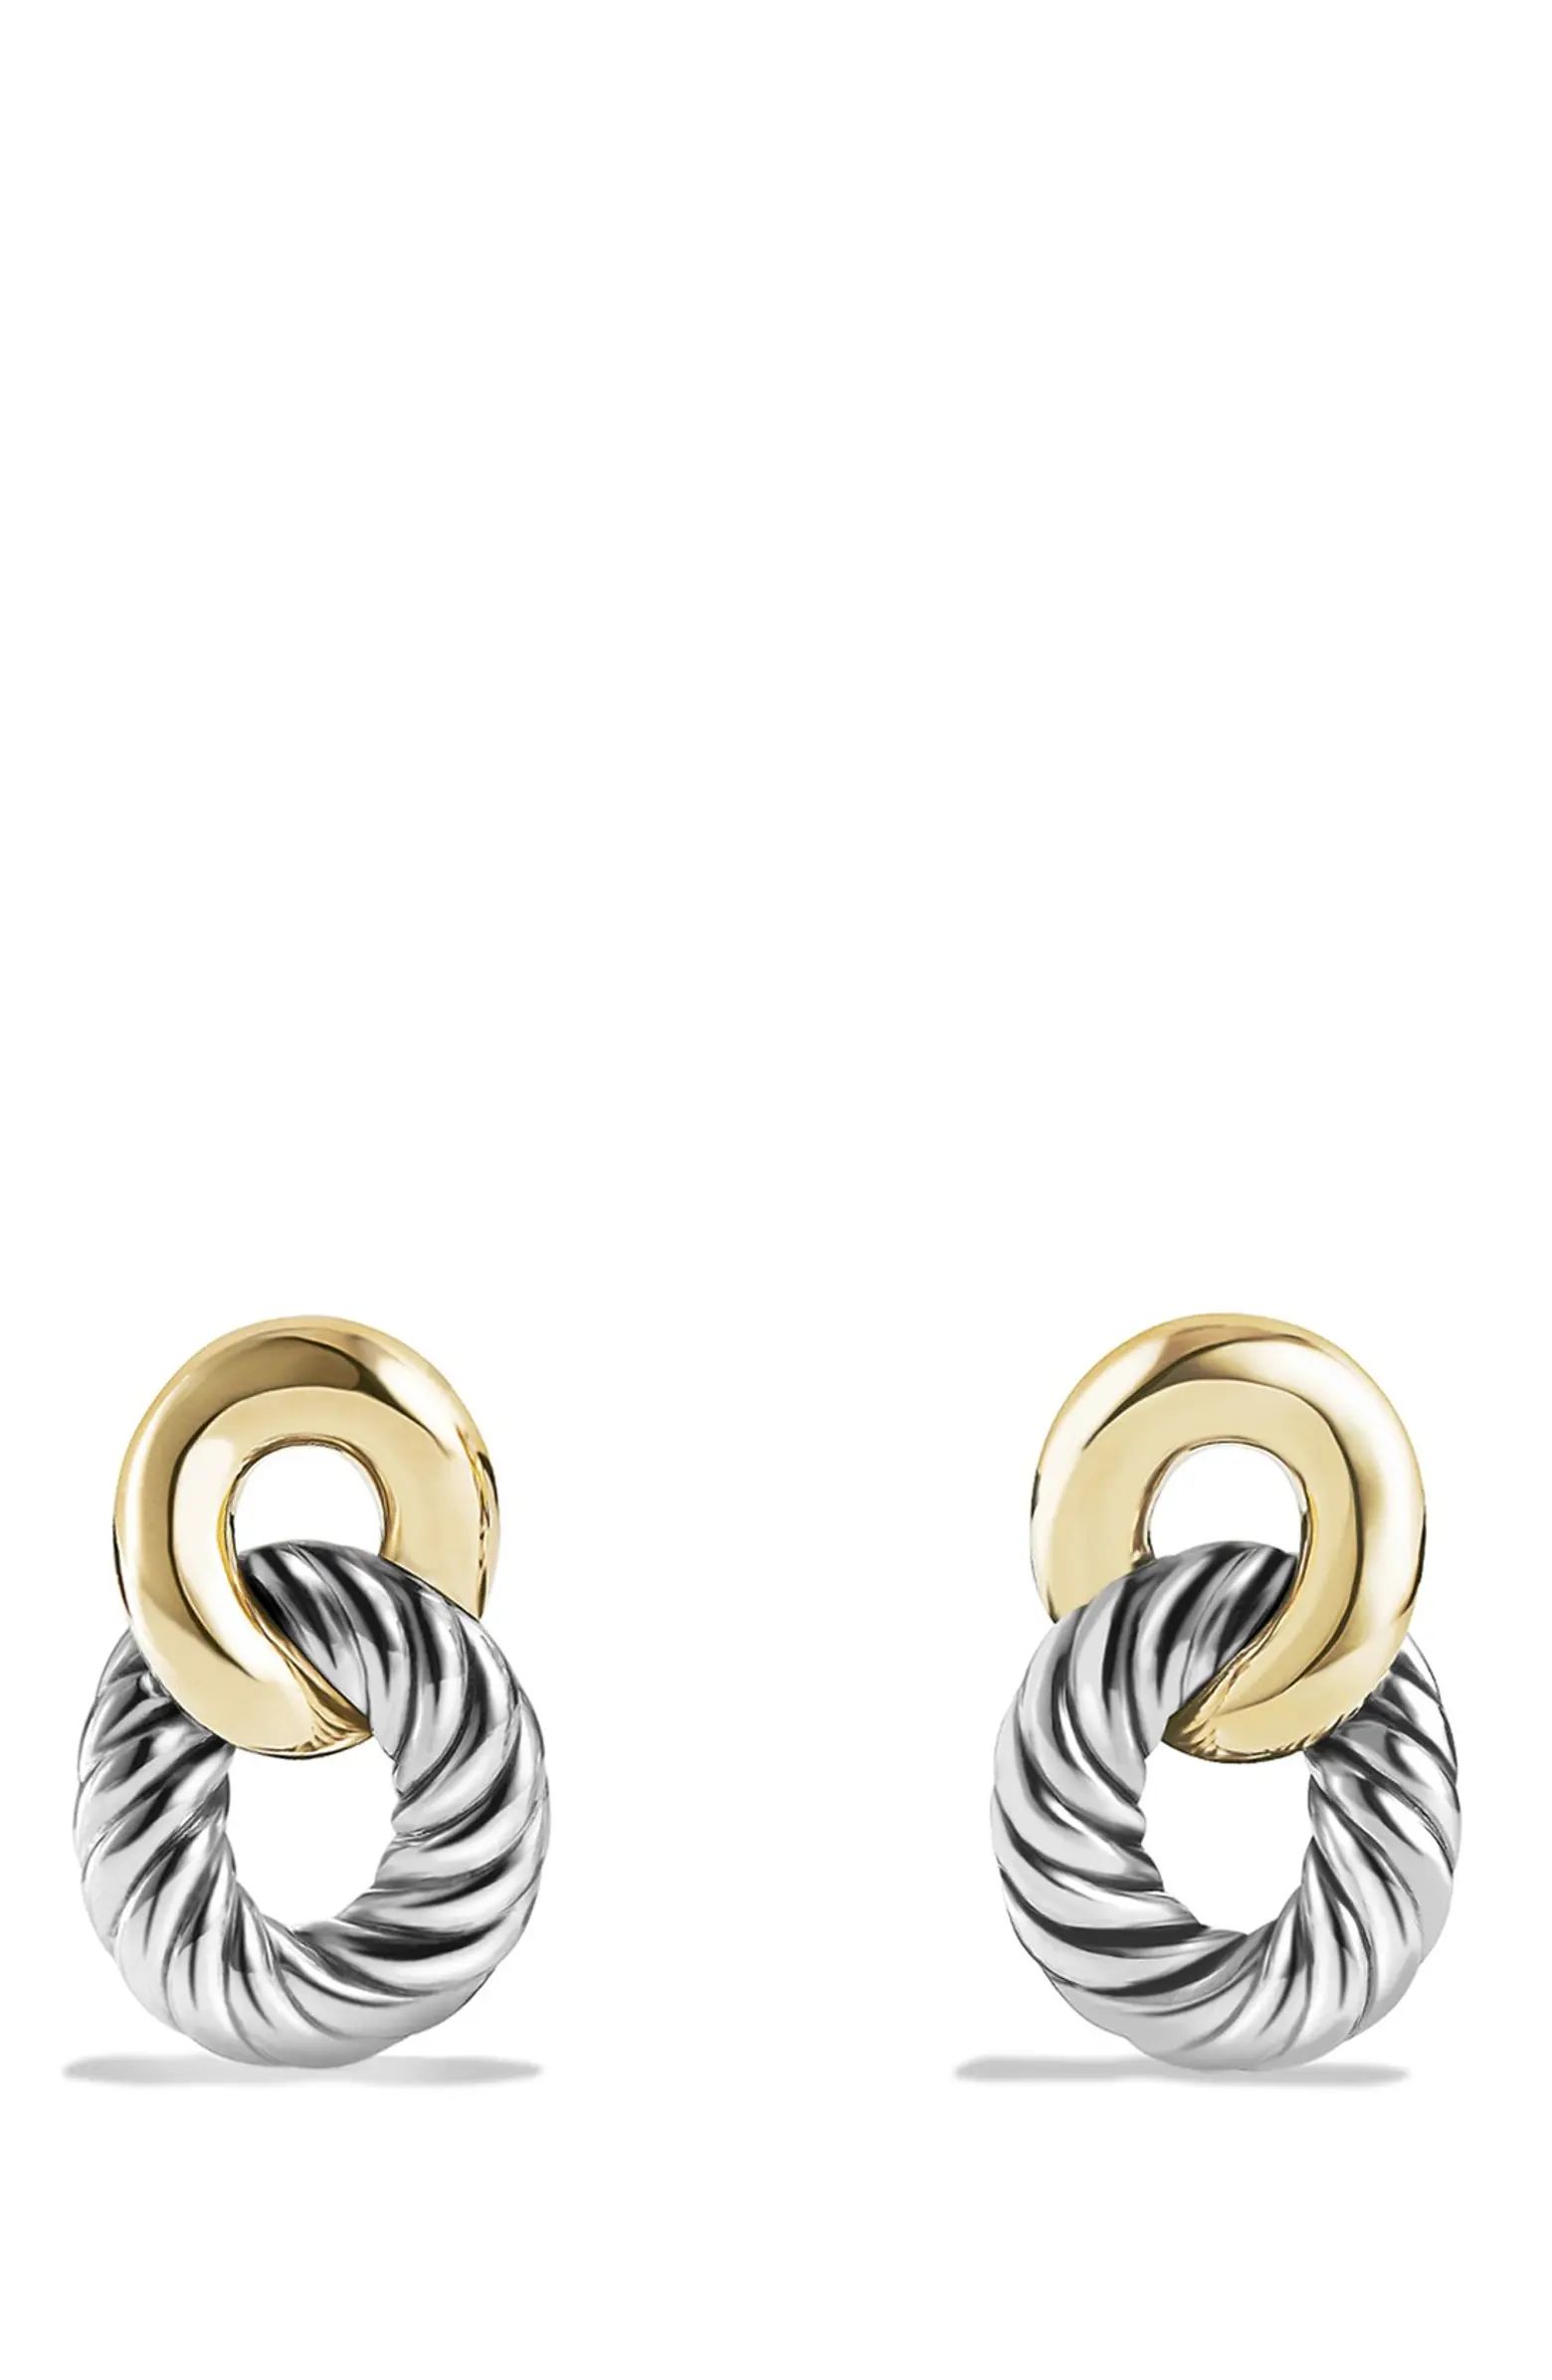 David Yurman Belmont Curb Link Drop Earrings with 18K Gold | Nordstrom | Nordstrom